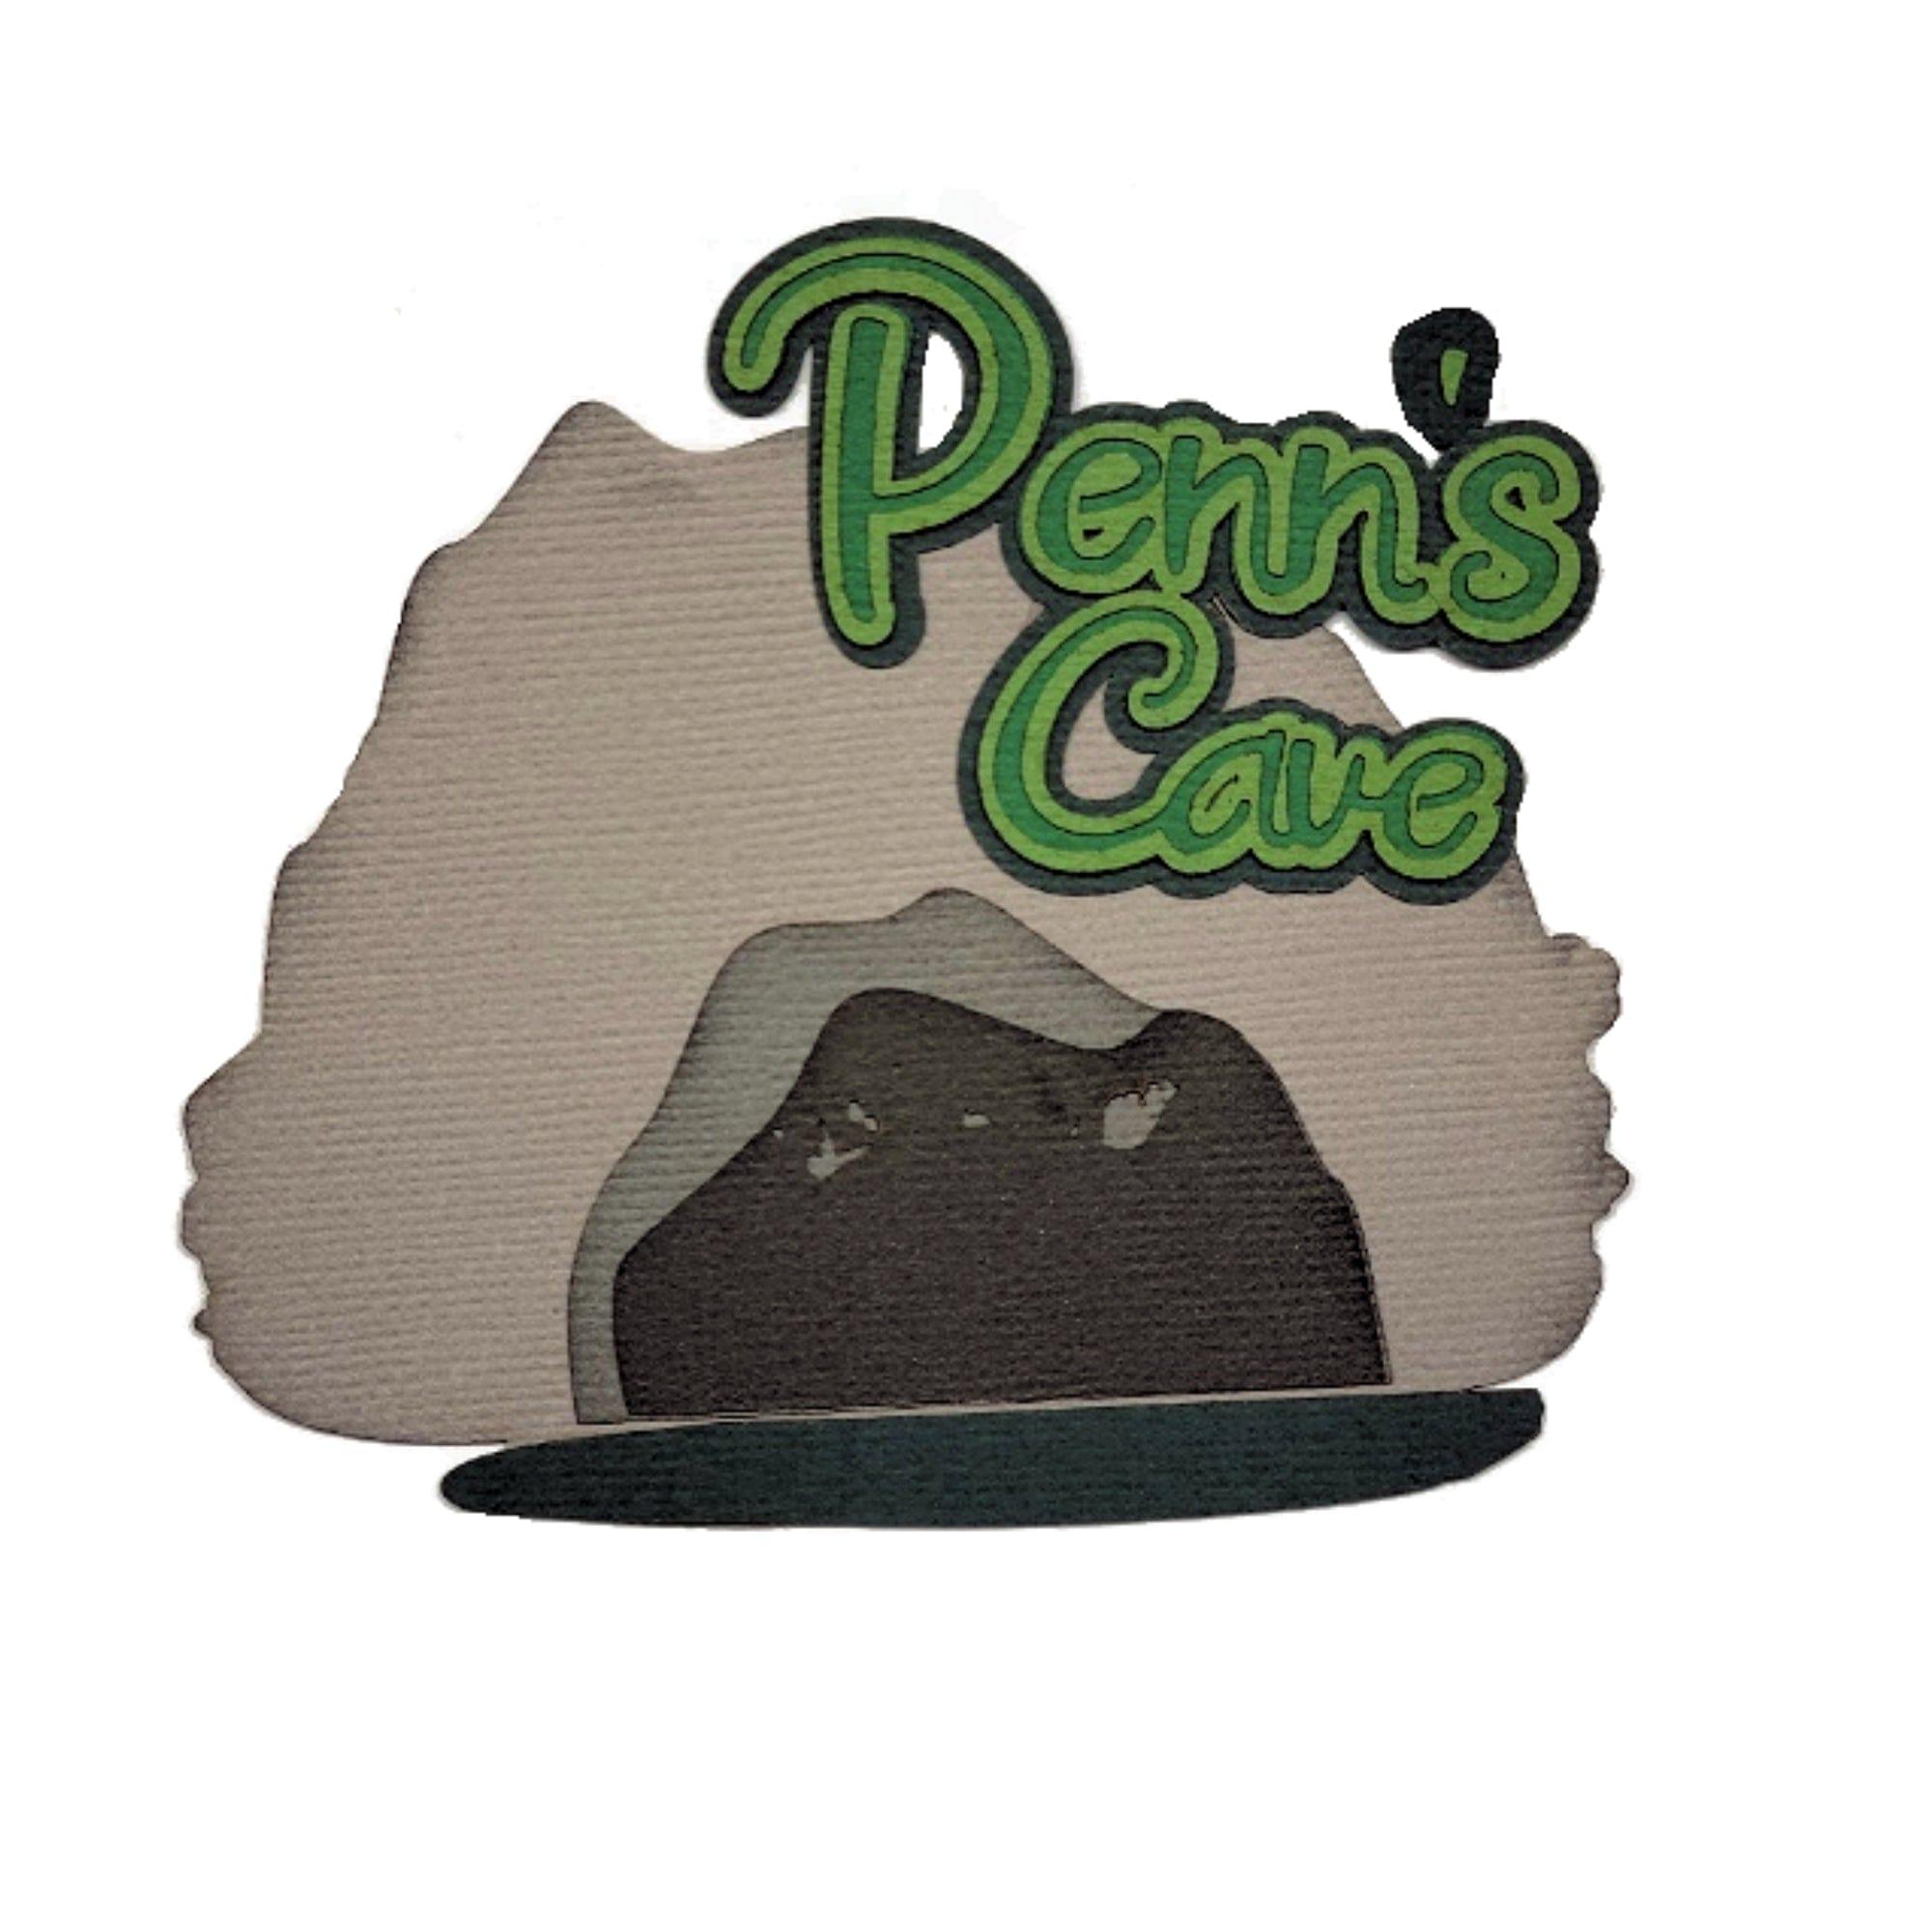 Penn's Cave 4 x 4 Laser Cut Scrapbook Embellishment by SSC Laser Designs